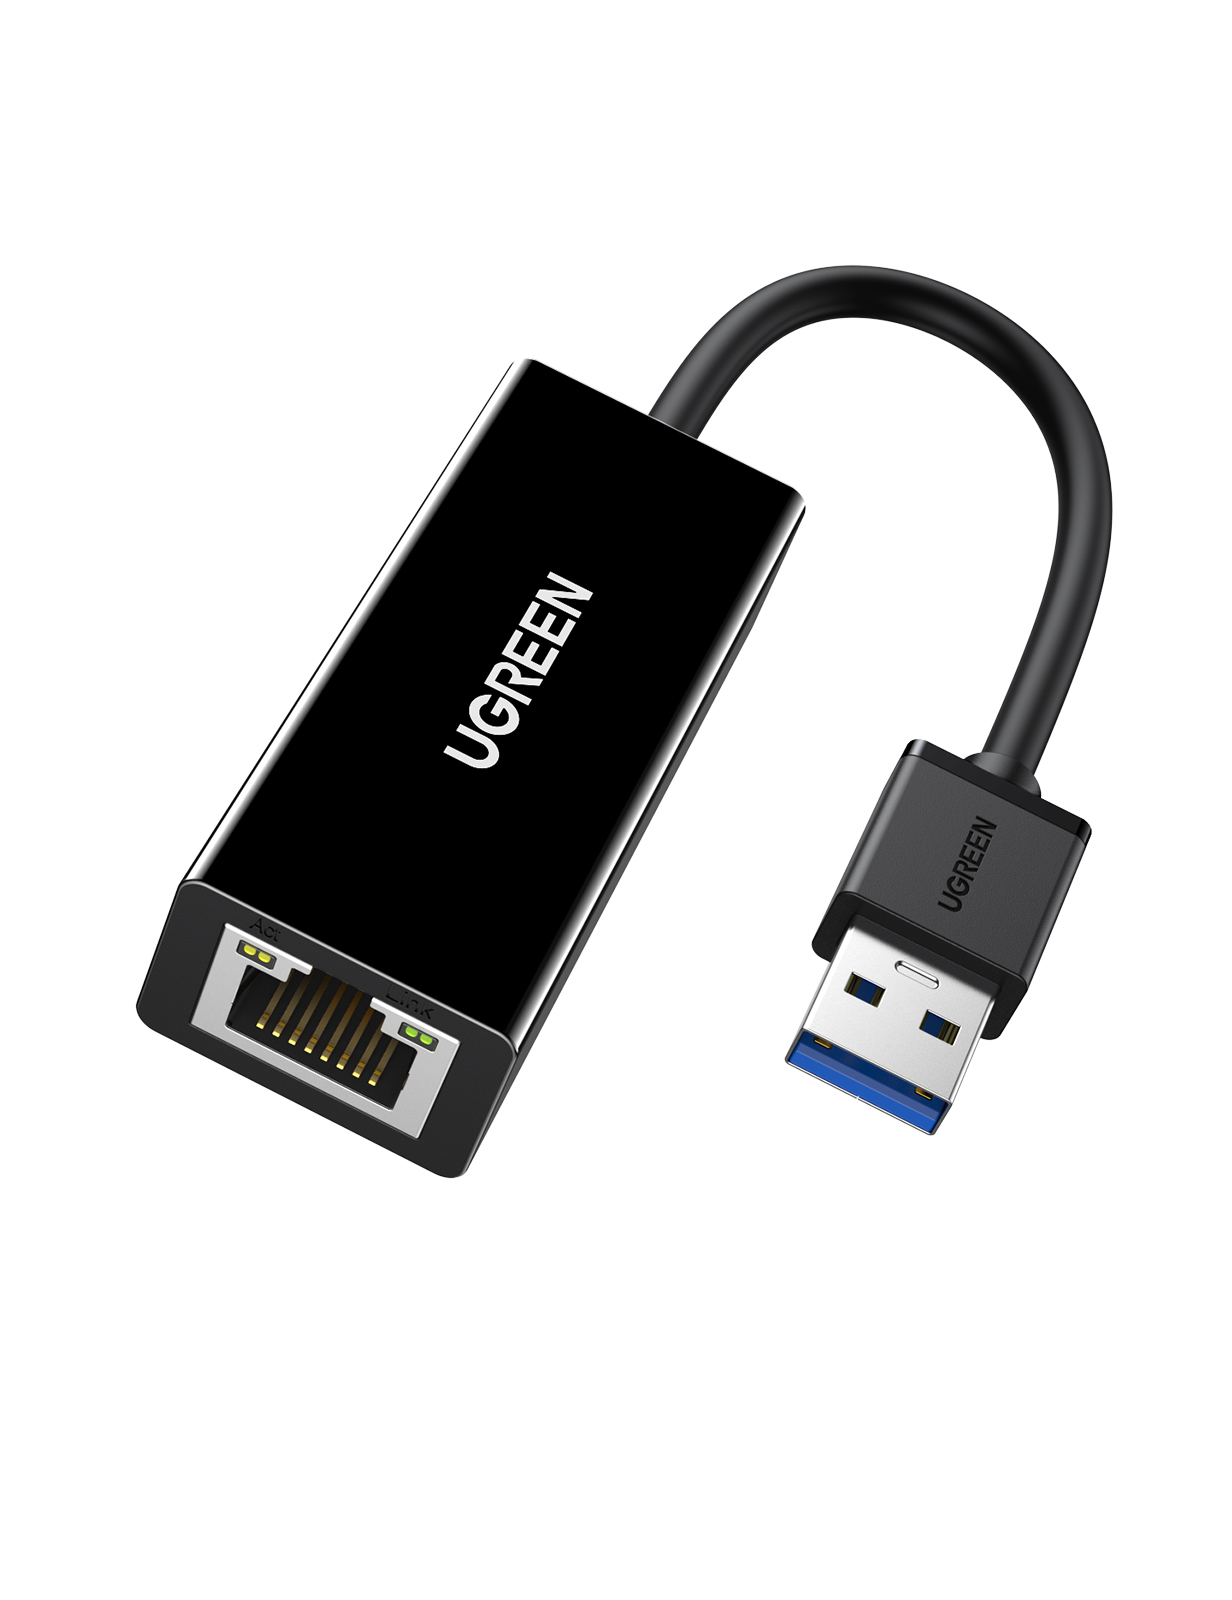 UGREEN USB 3.0 Gigabit Ethernet Adapter (Black) - OPENED BOX 73828